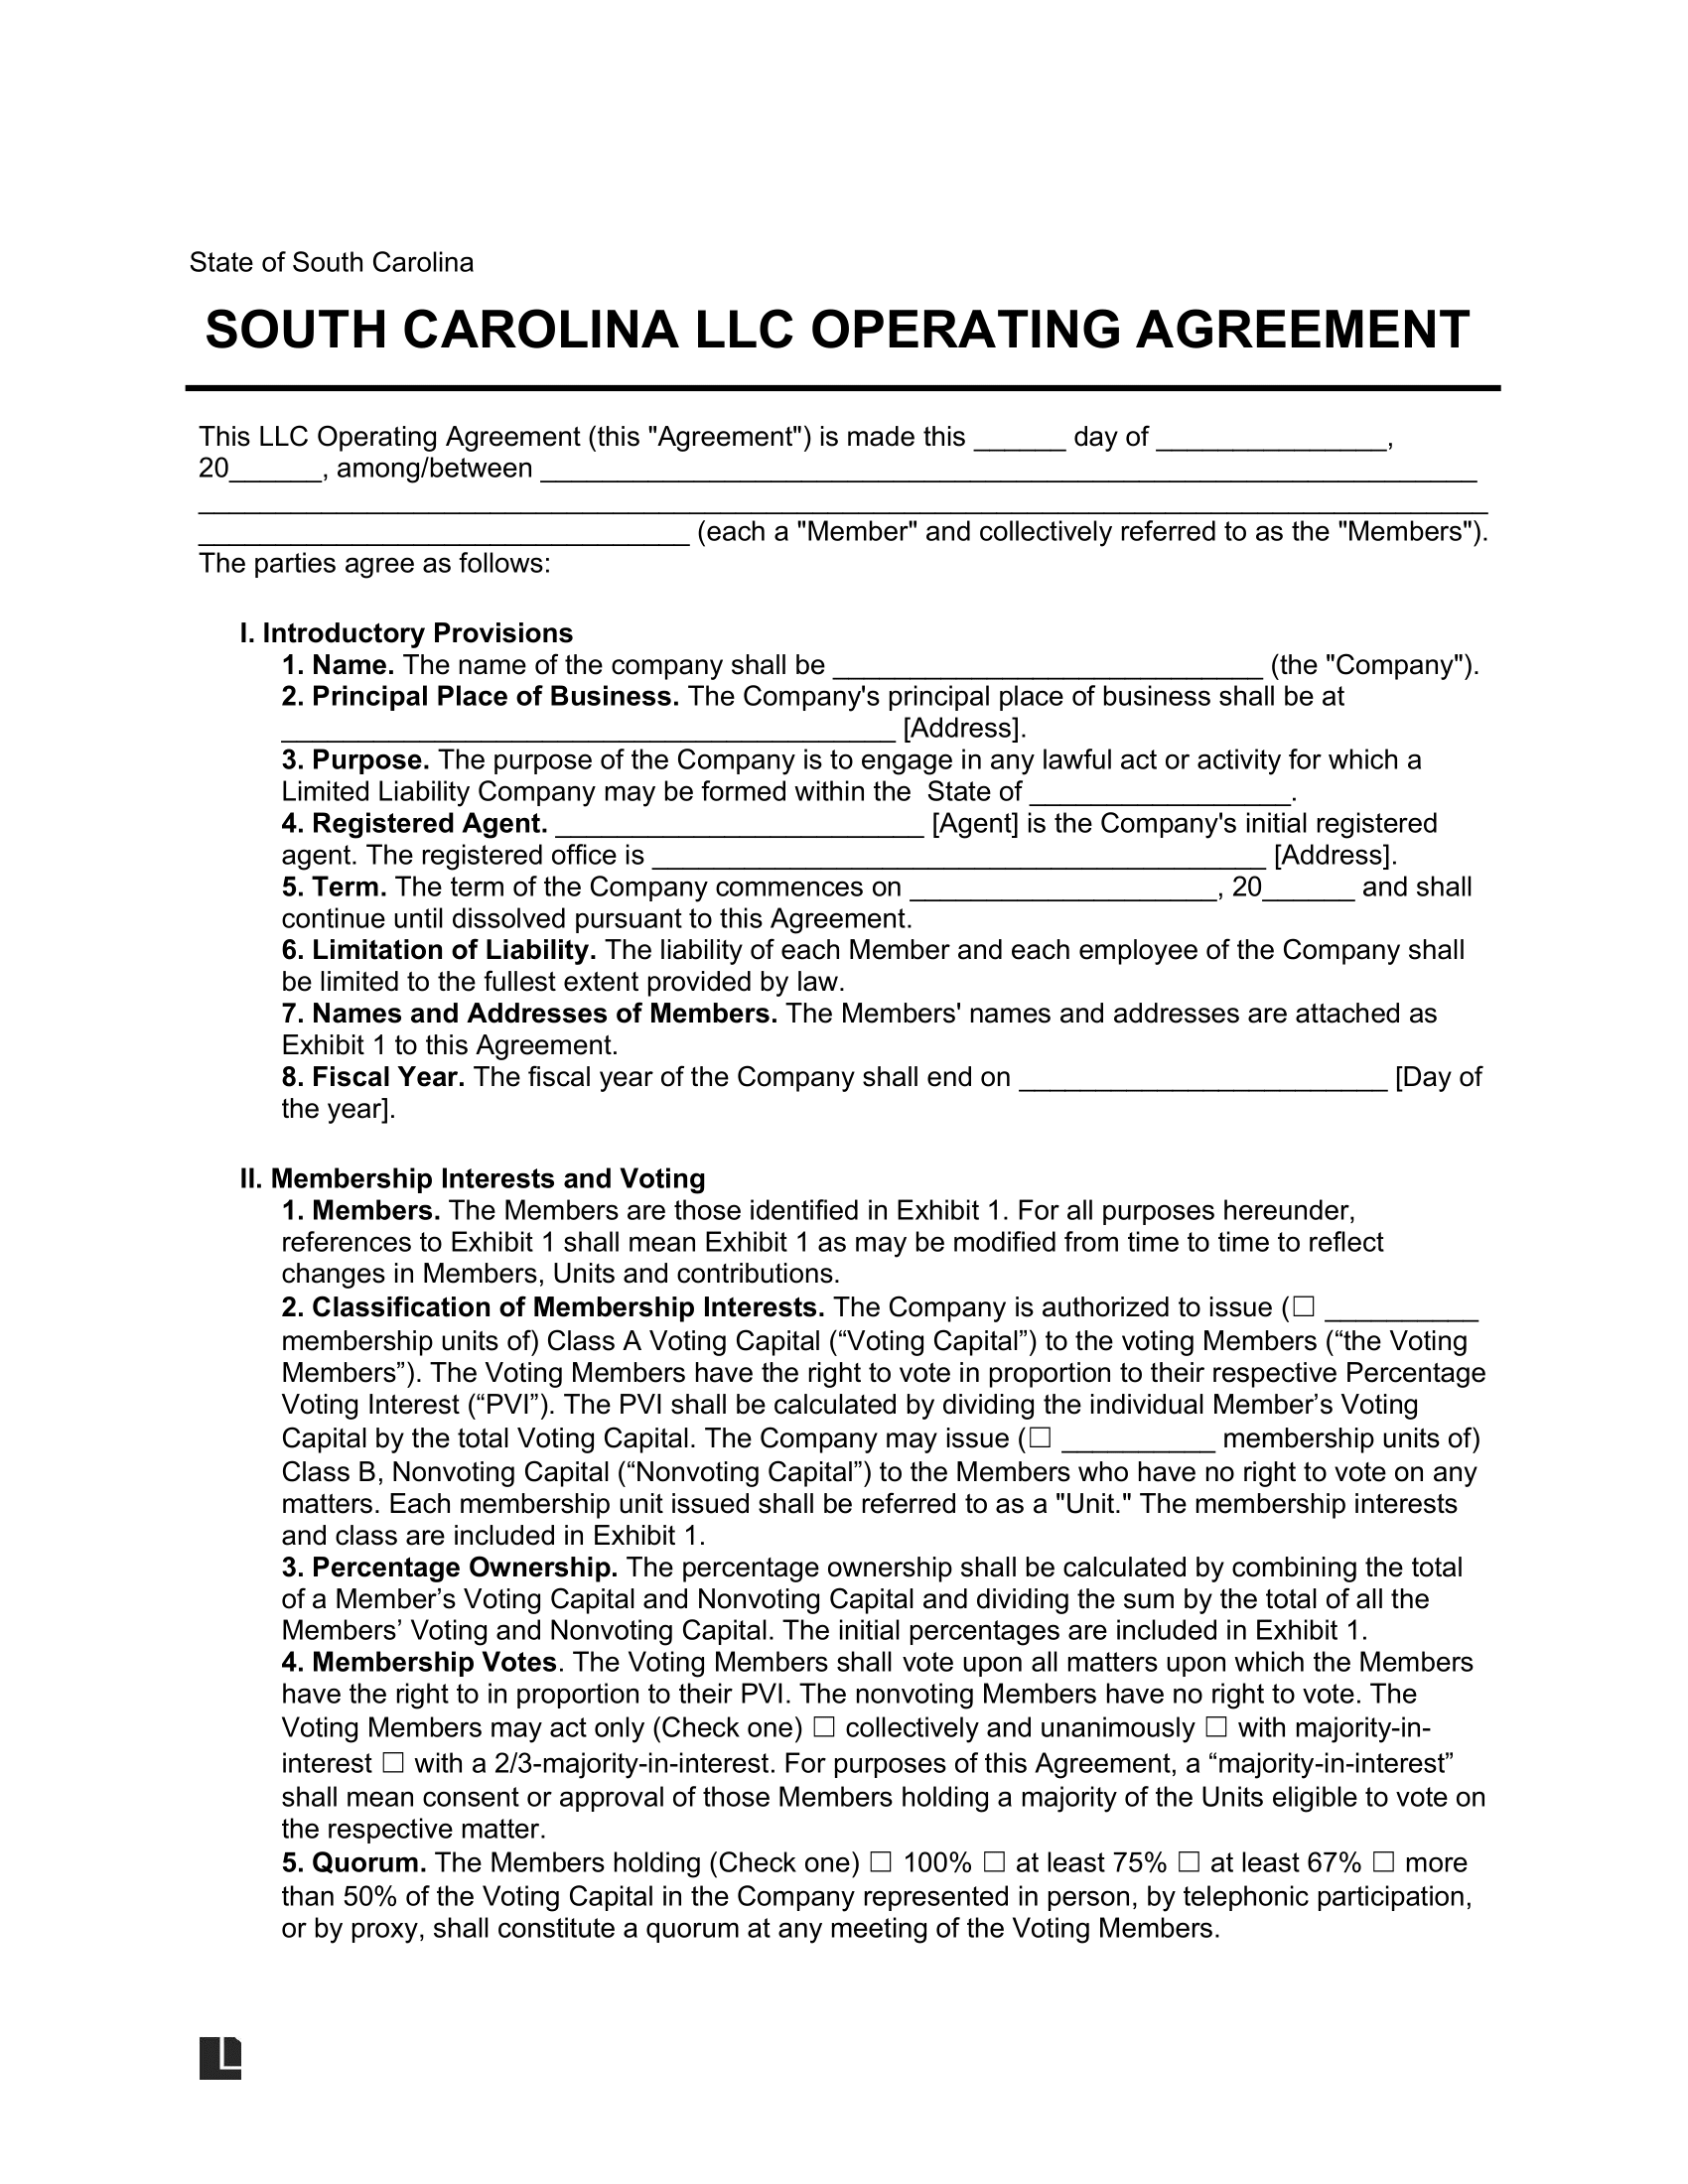 South Carolina LLC Operating Agreement Template